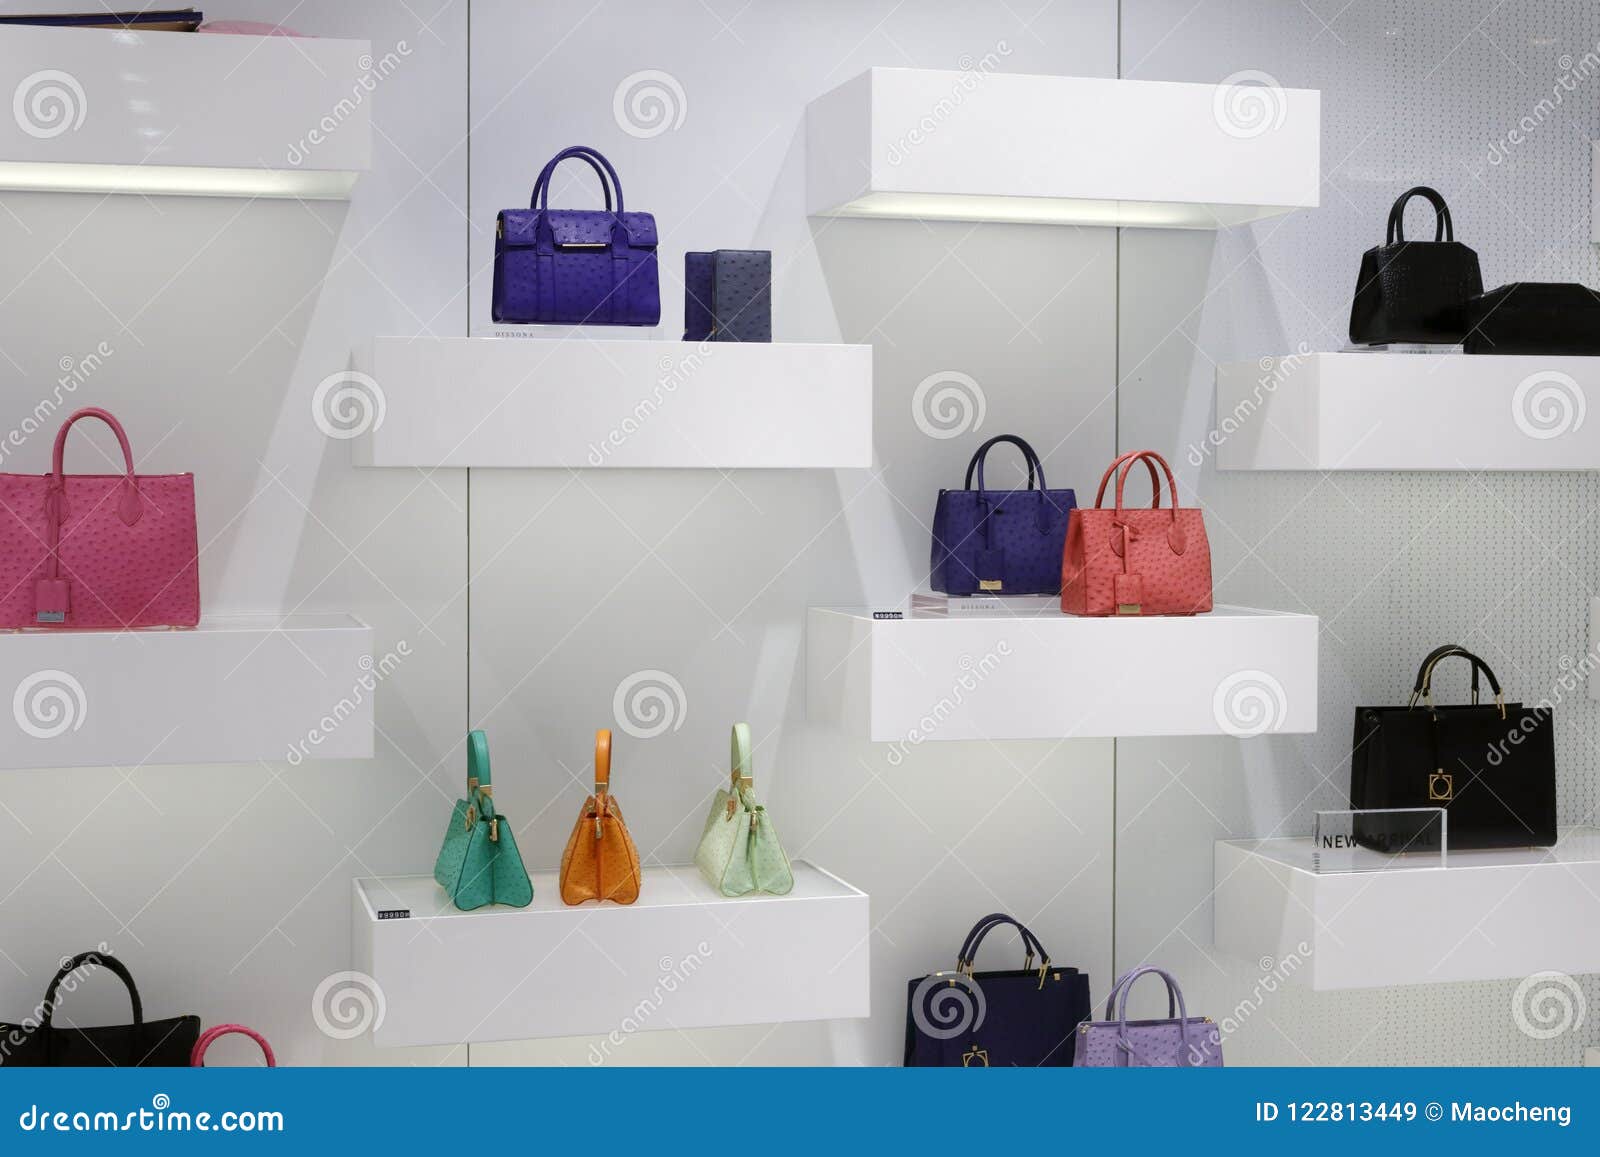 China Luxury Handbag Brand Dissona, Adobe Rgb Editorial Stock Image - Image  of layer, expensive: 122813449